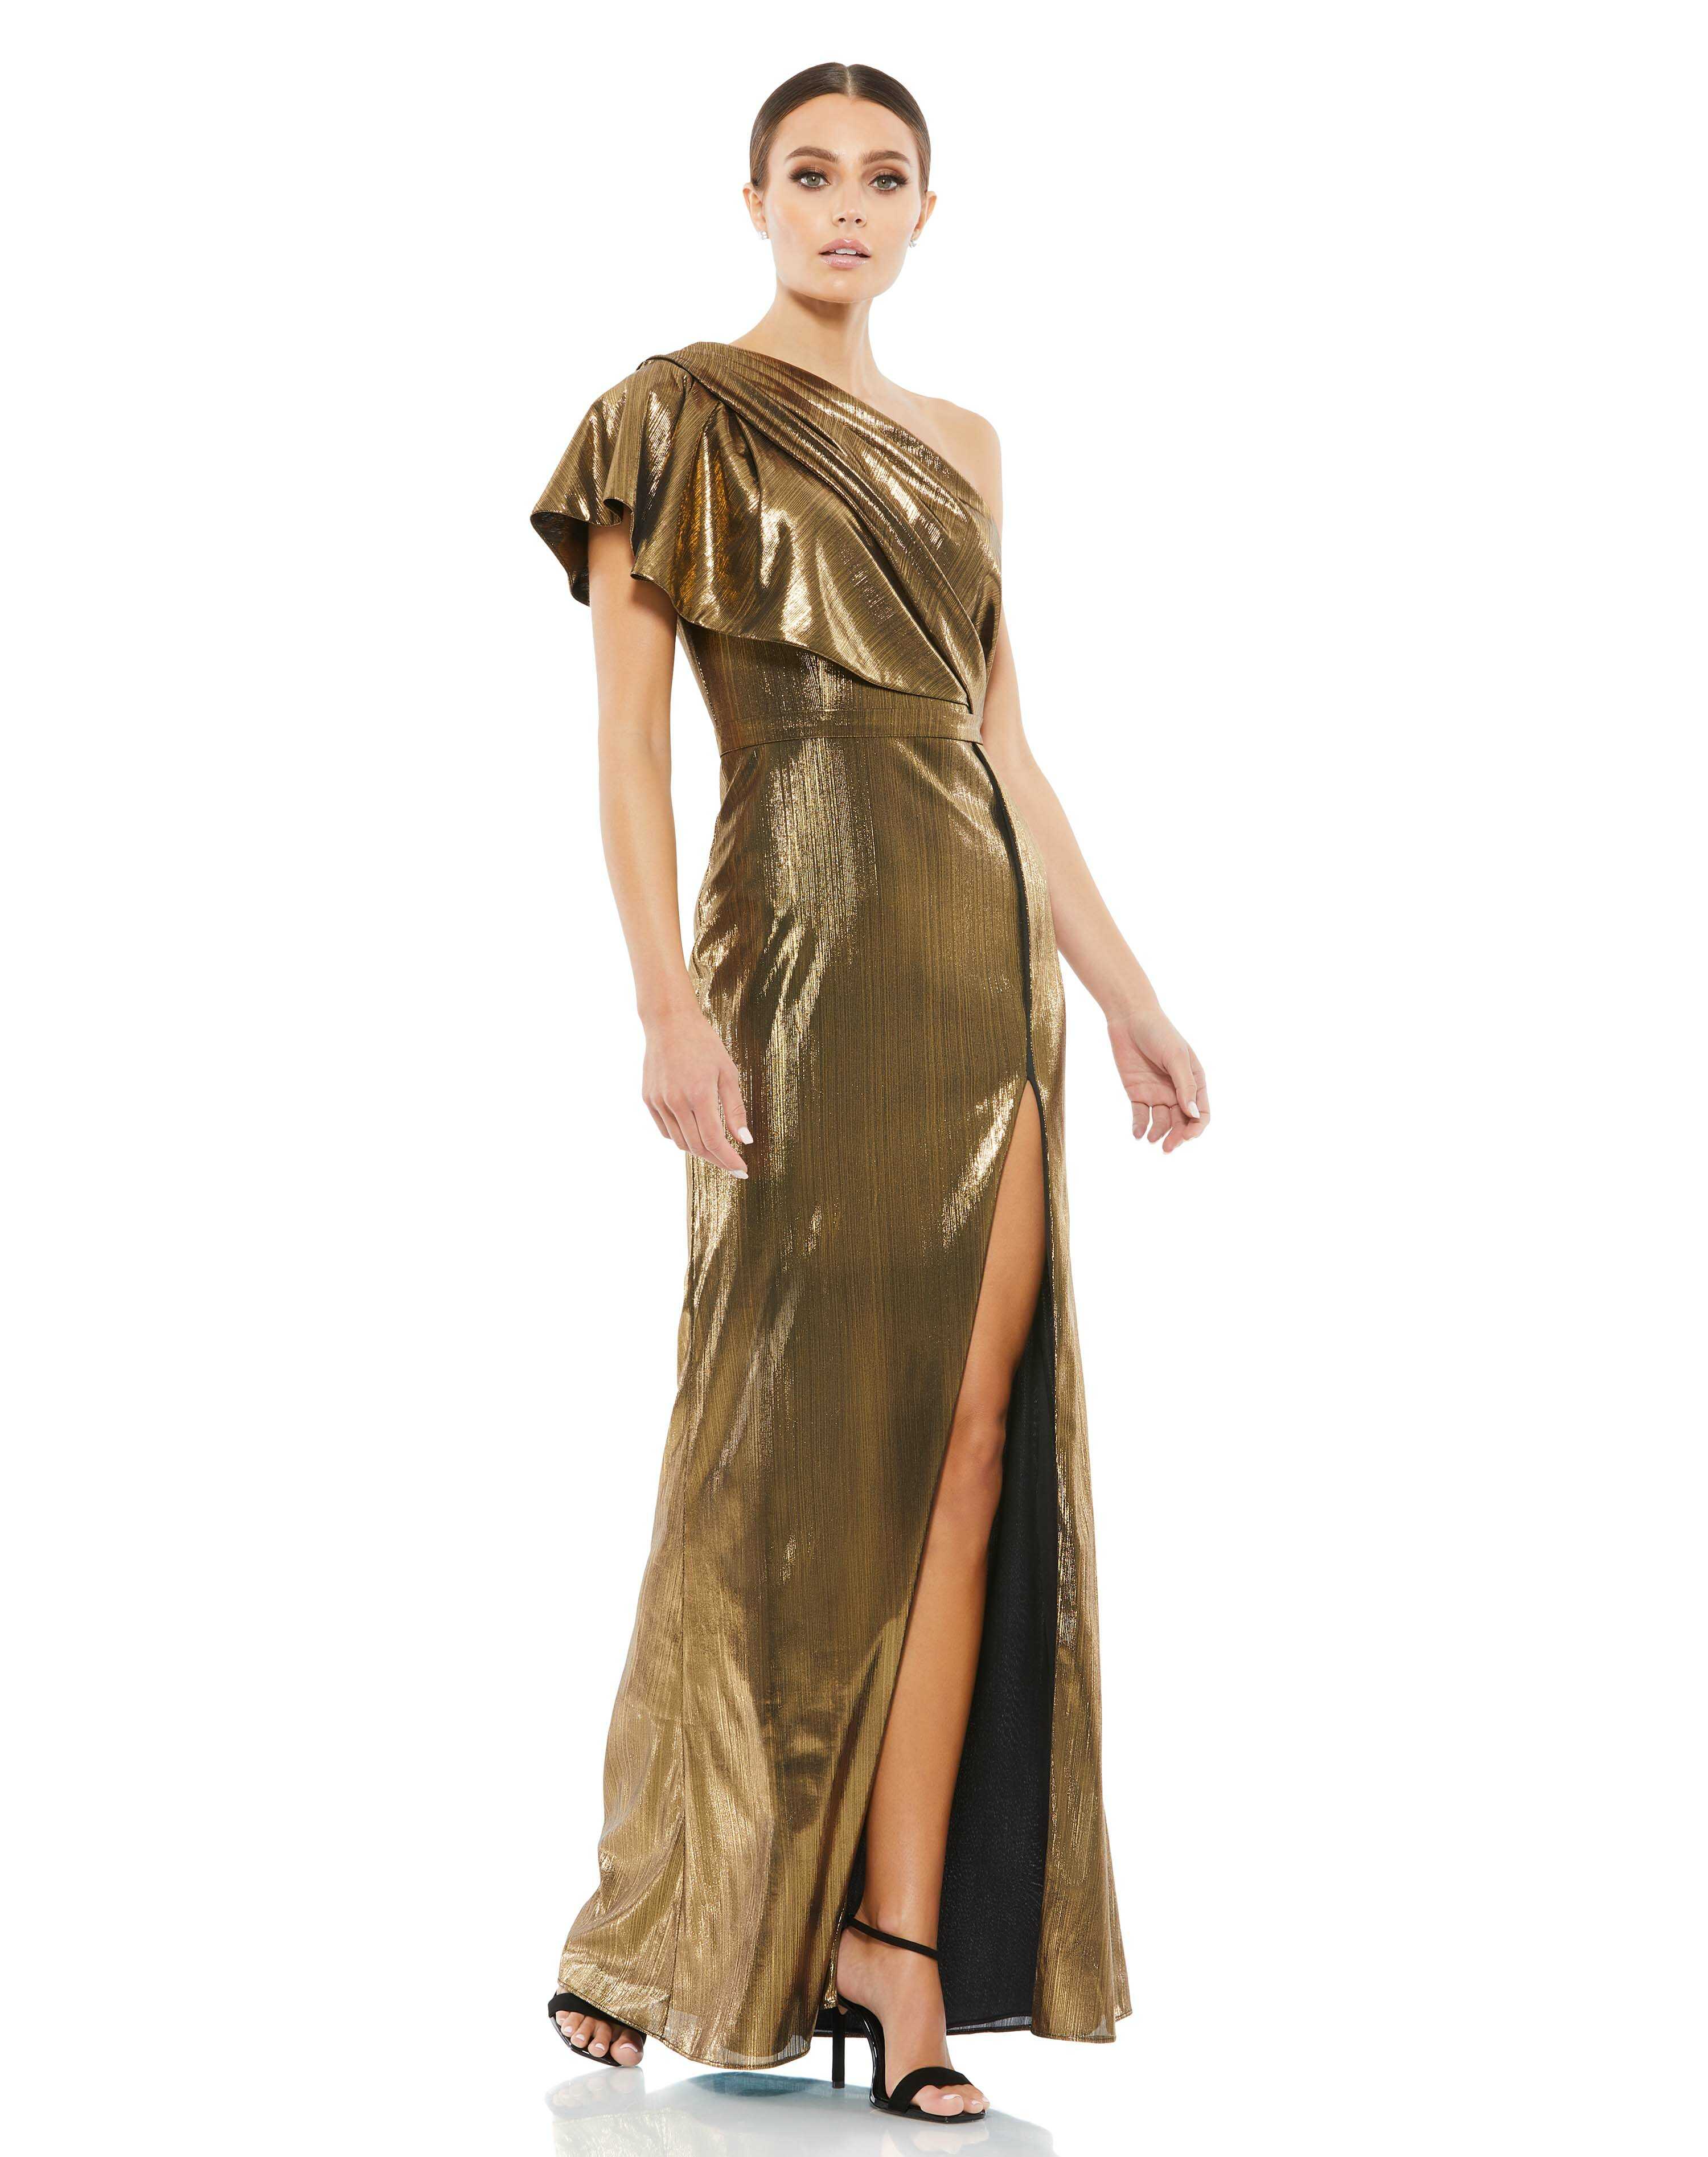 Ruffled One Shoulder Metallic Evening Gown